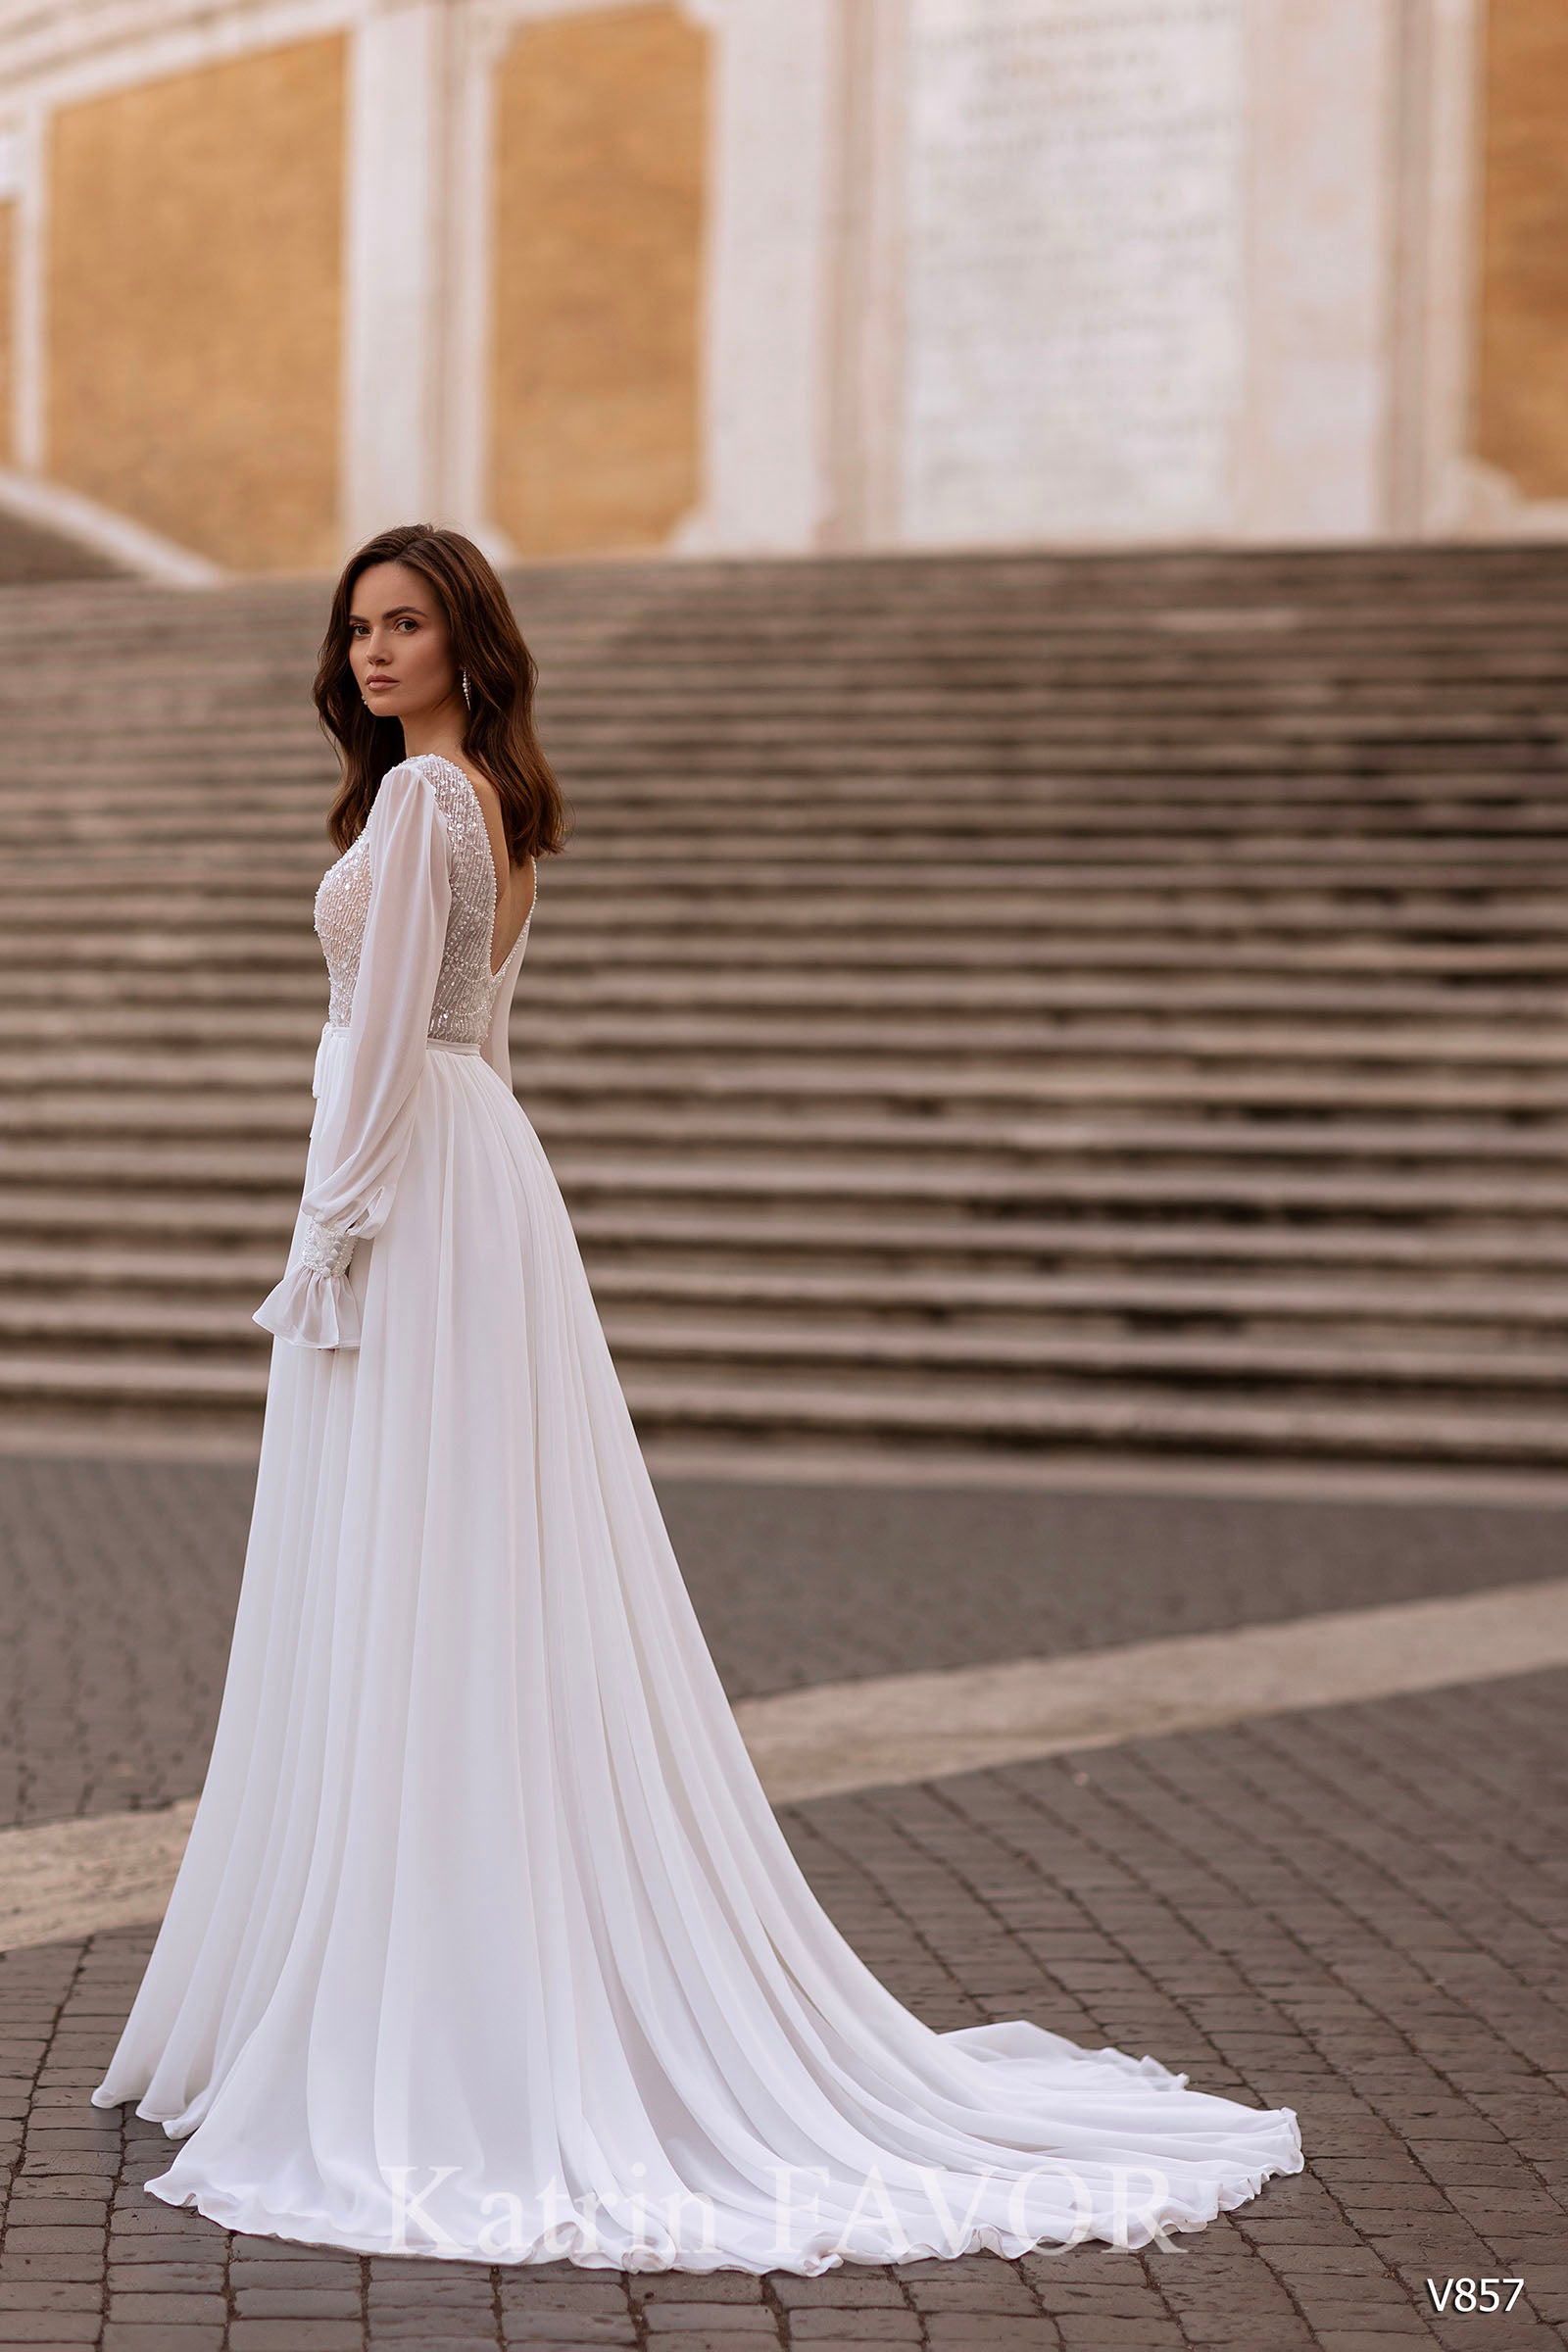 KatrinFAVORboutique-Chiffon bishop sleeve boho wedding dress